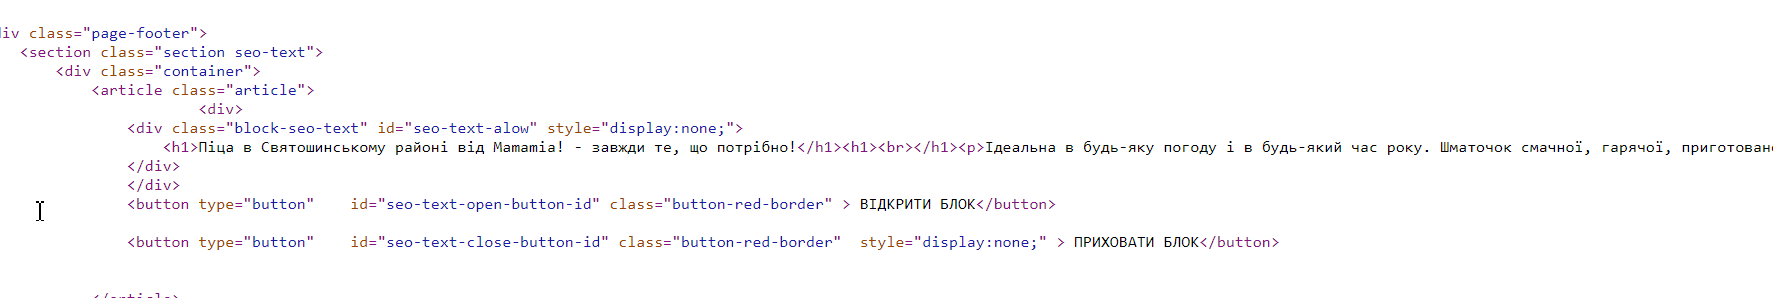 Пример кода страницы сайта.